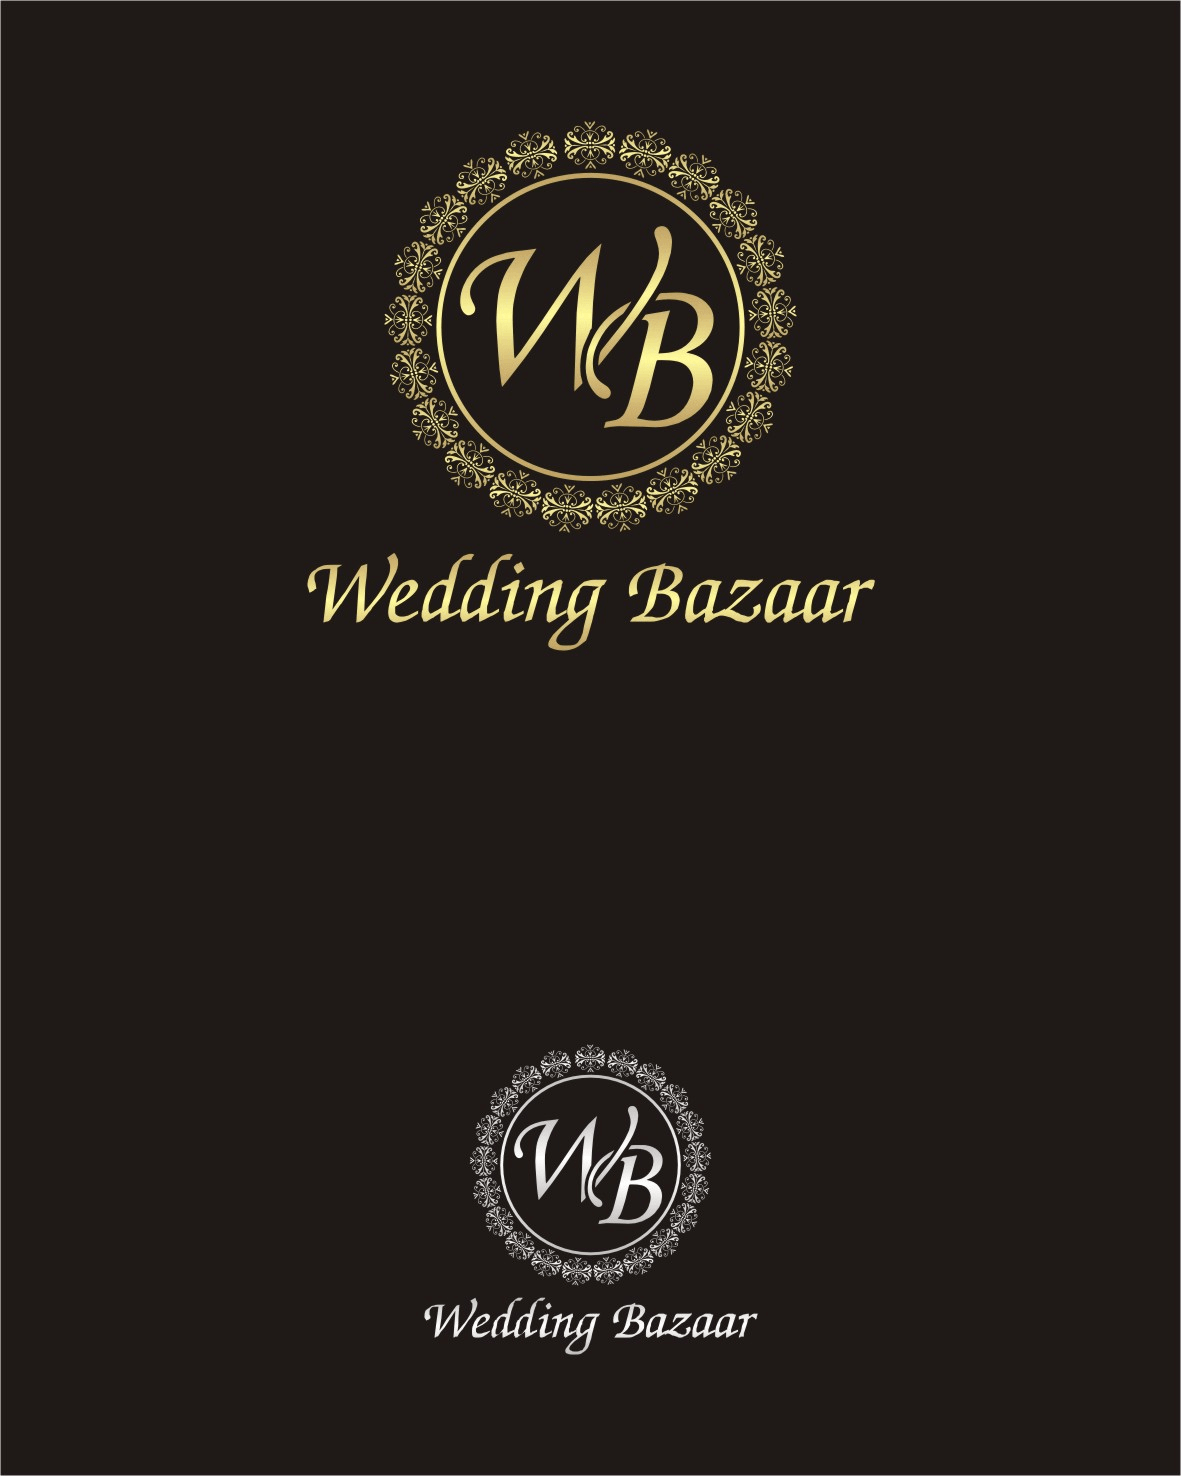 Spider -Man 2 Logo - Logo Design Contests » Imaginative Logo Design for Wedding Bazaar ...